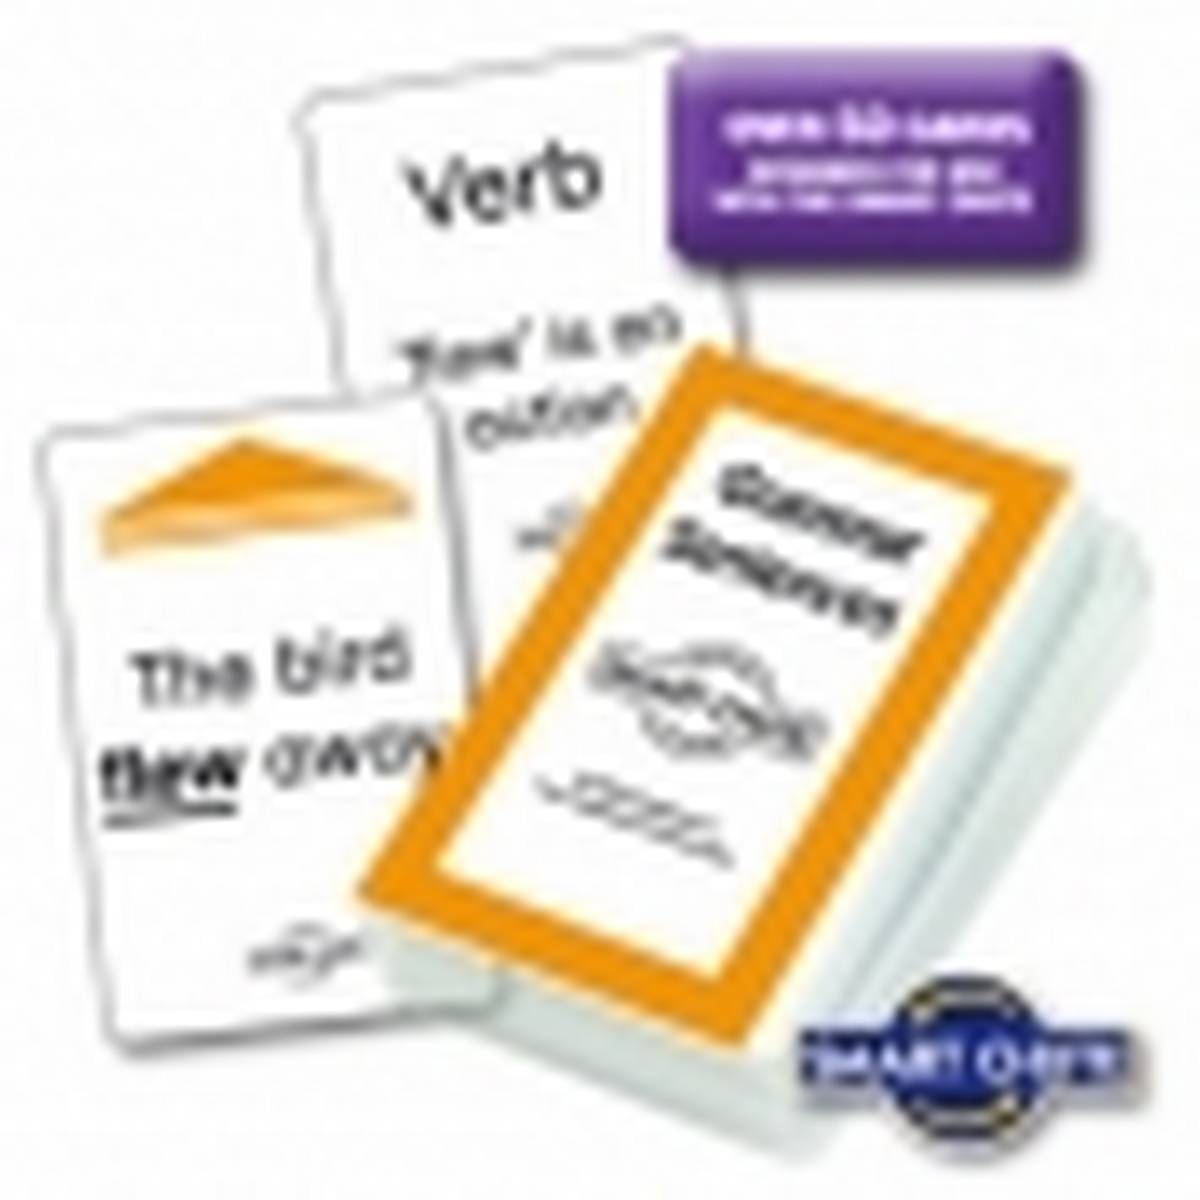 Grammar Sentences Chute Cards